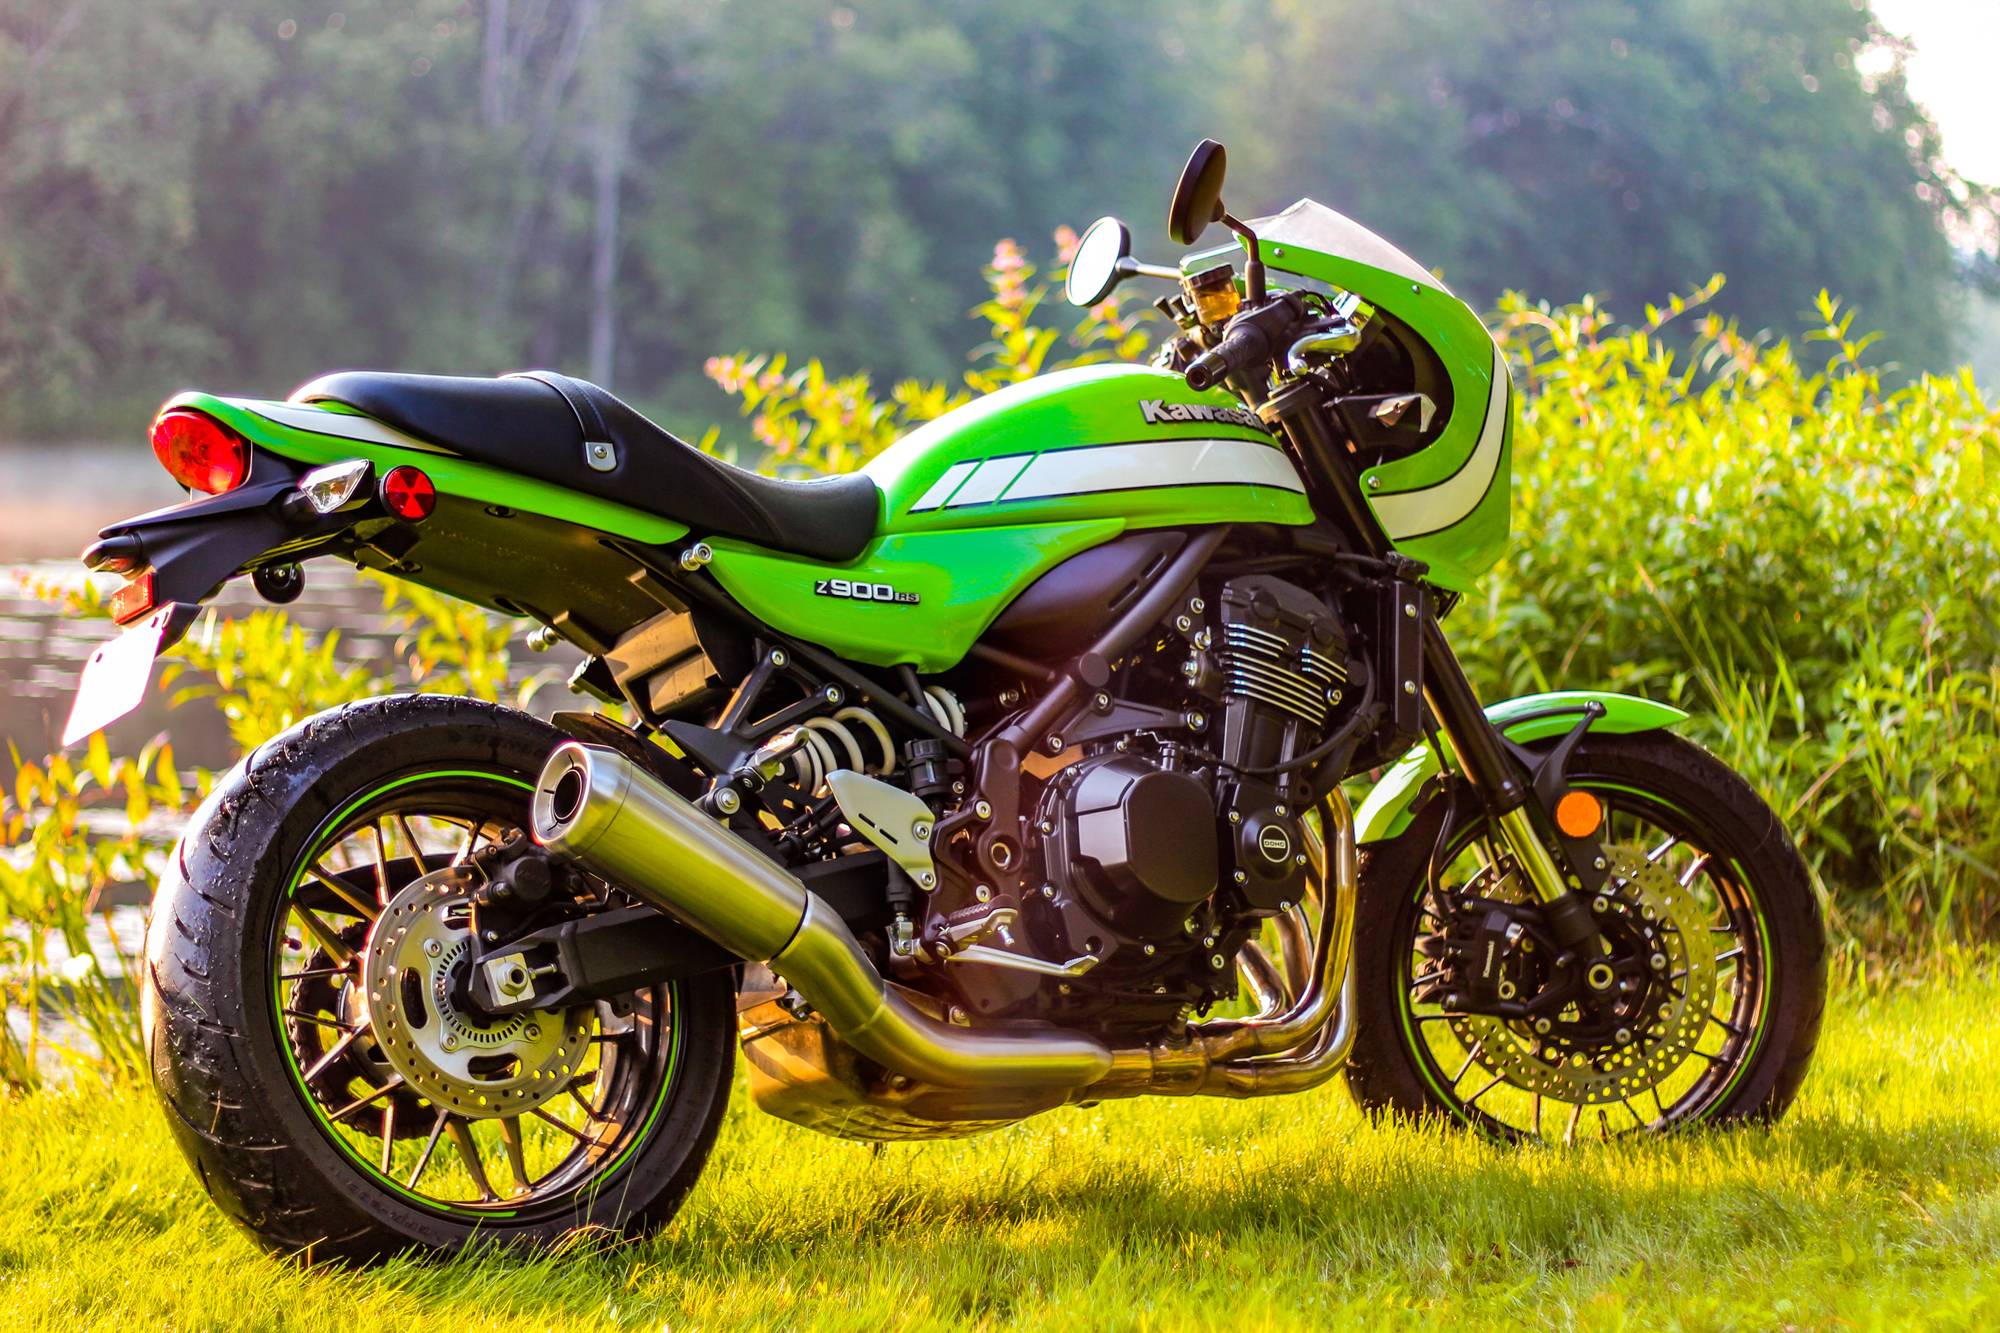 Kawasaki z900rs teaser video: the new modern-classic teased